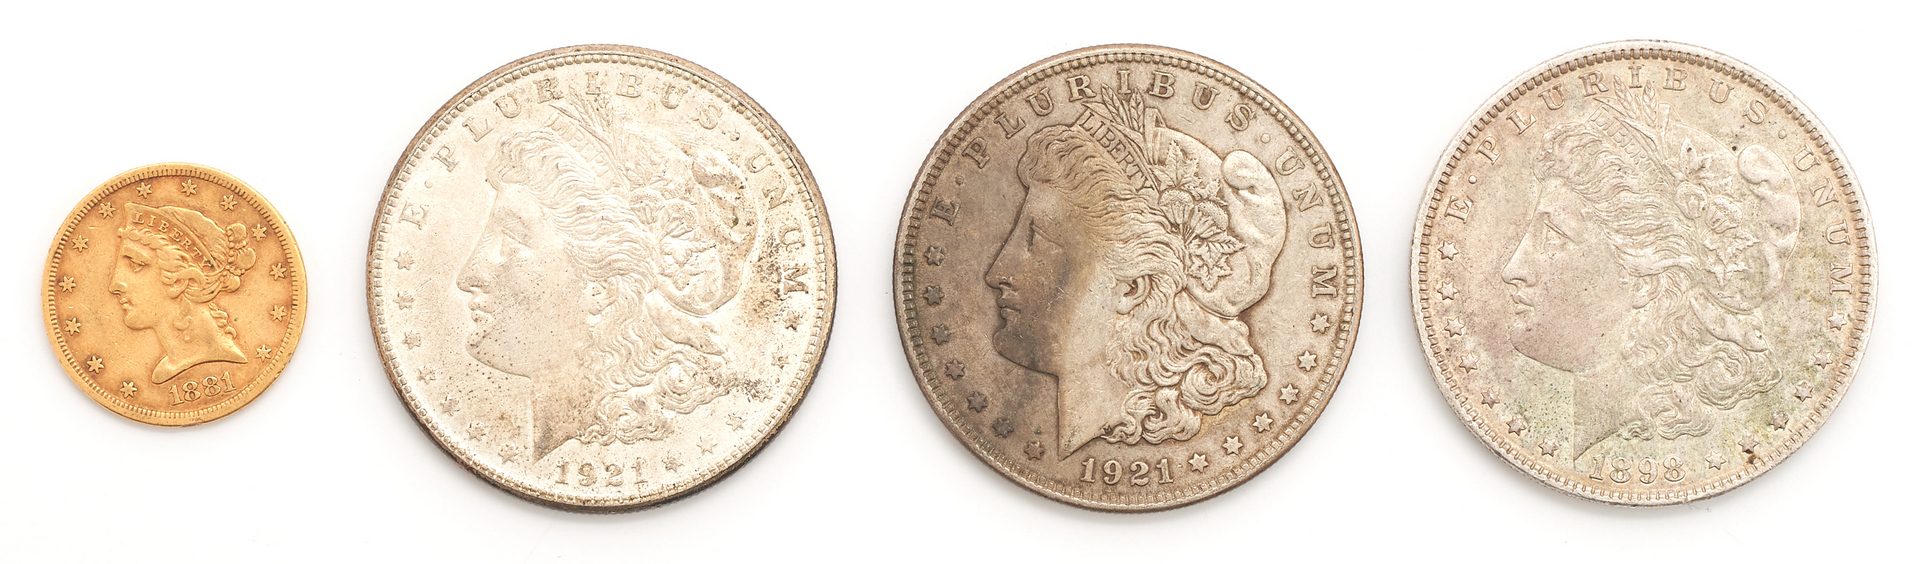 Lot 836: 1881 $5 Liberty Gold Coin & 3 Morgans, 4 items